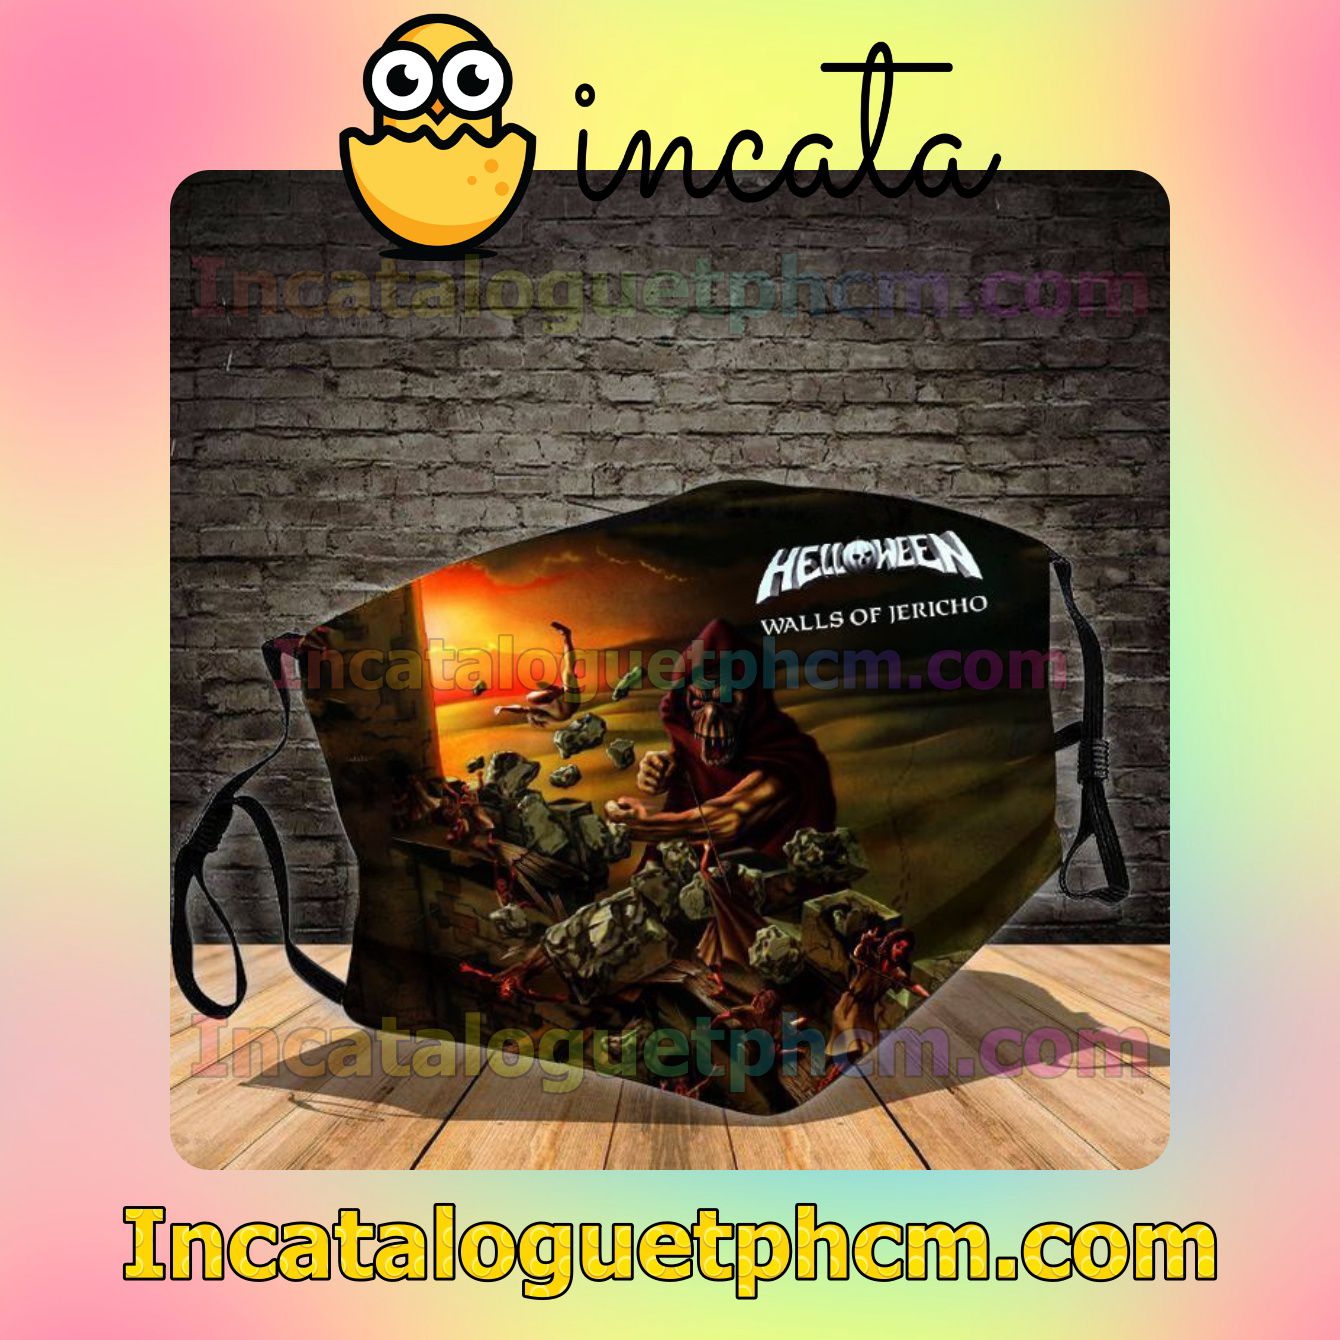 Helloween Walls Of Jericho Album Cover Cotton Masks